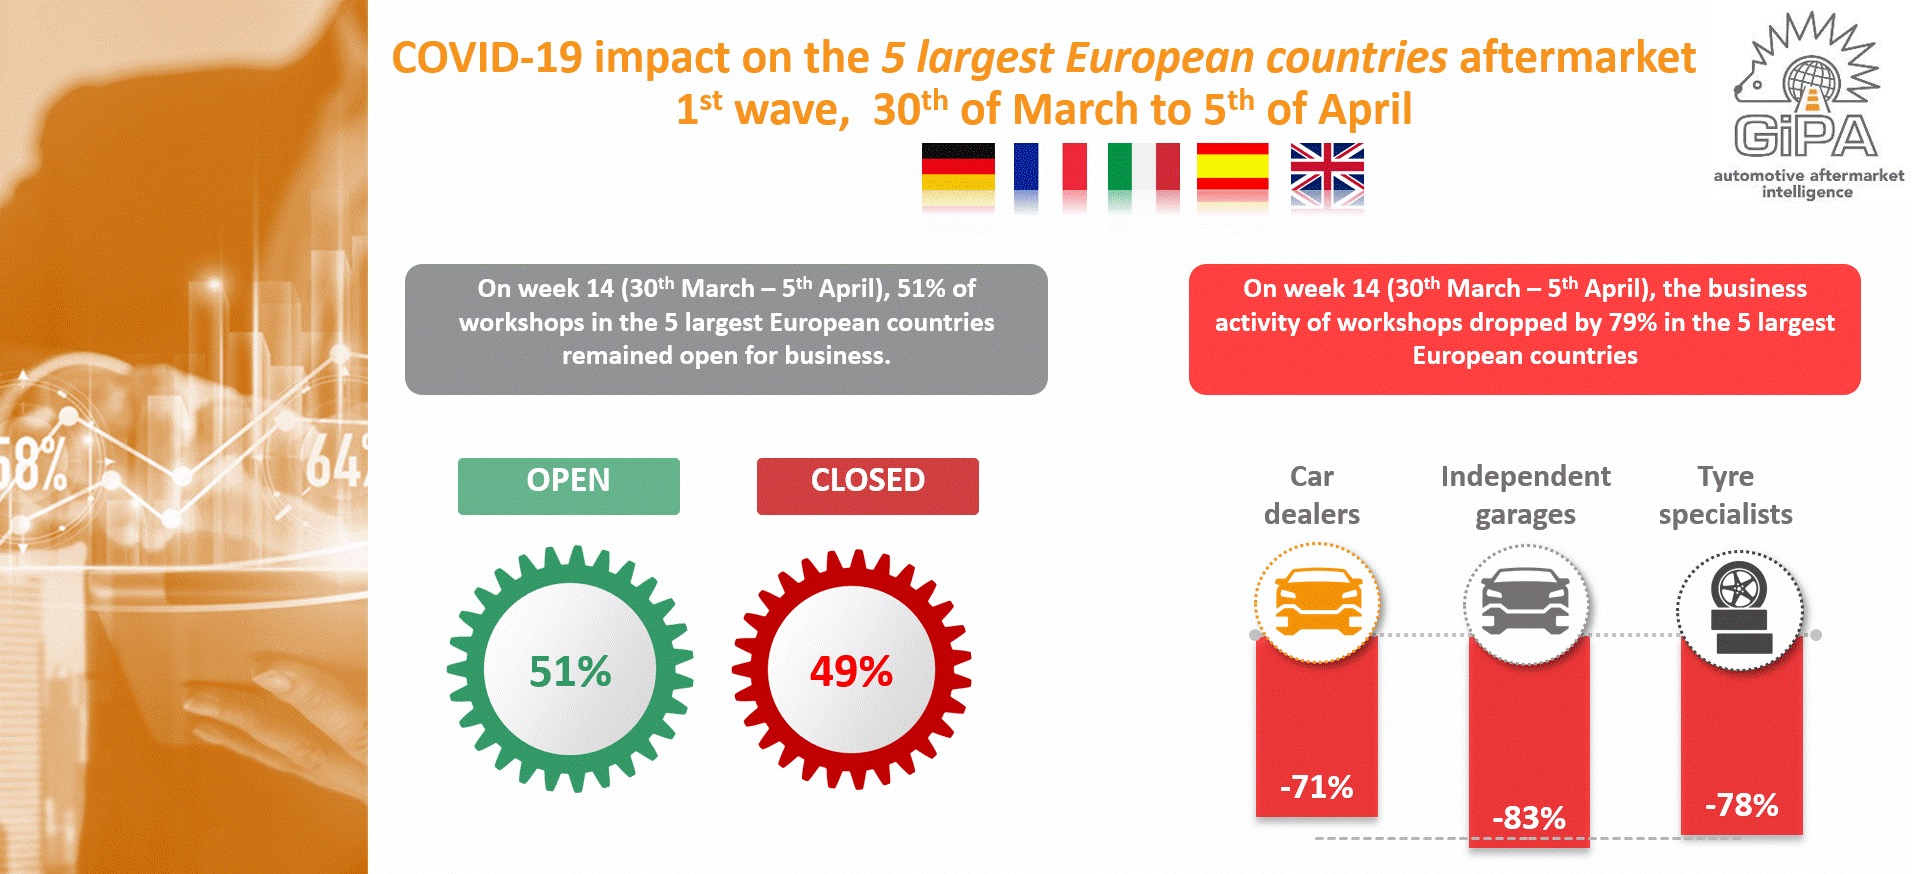 More than half of UK garages closed, similar figures across Europe